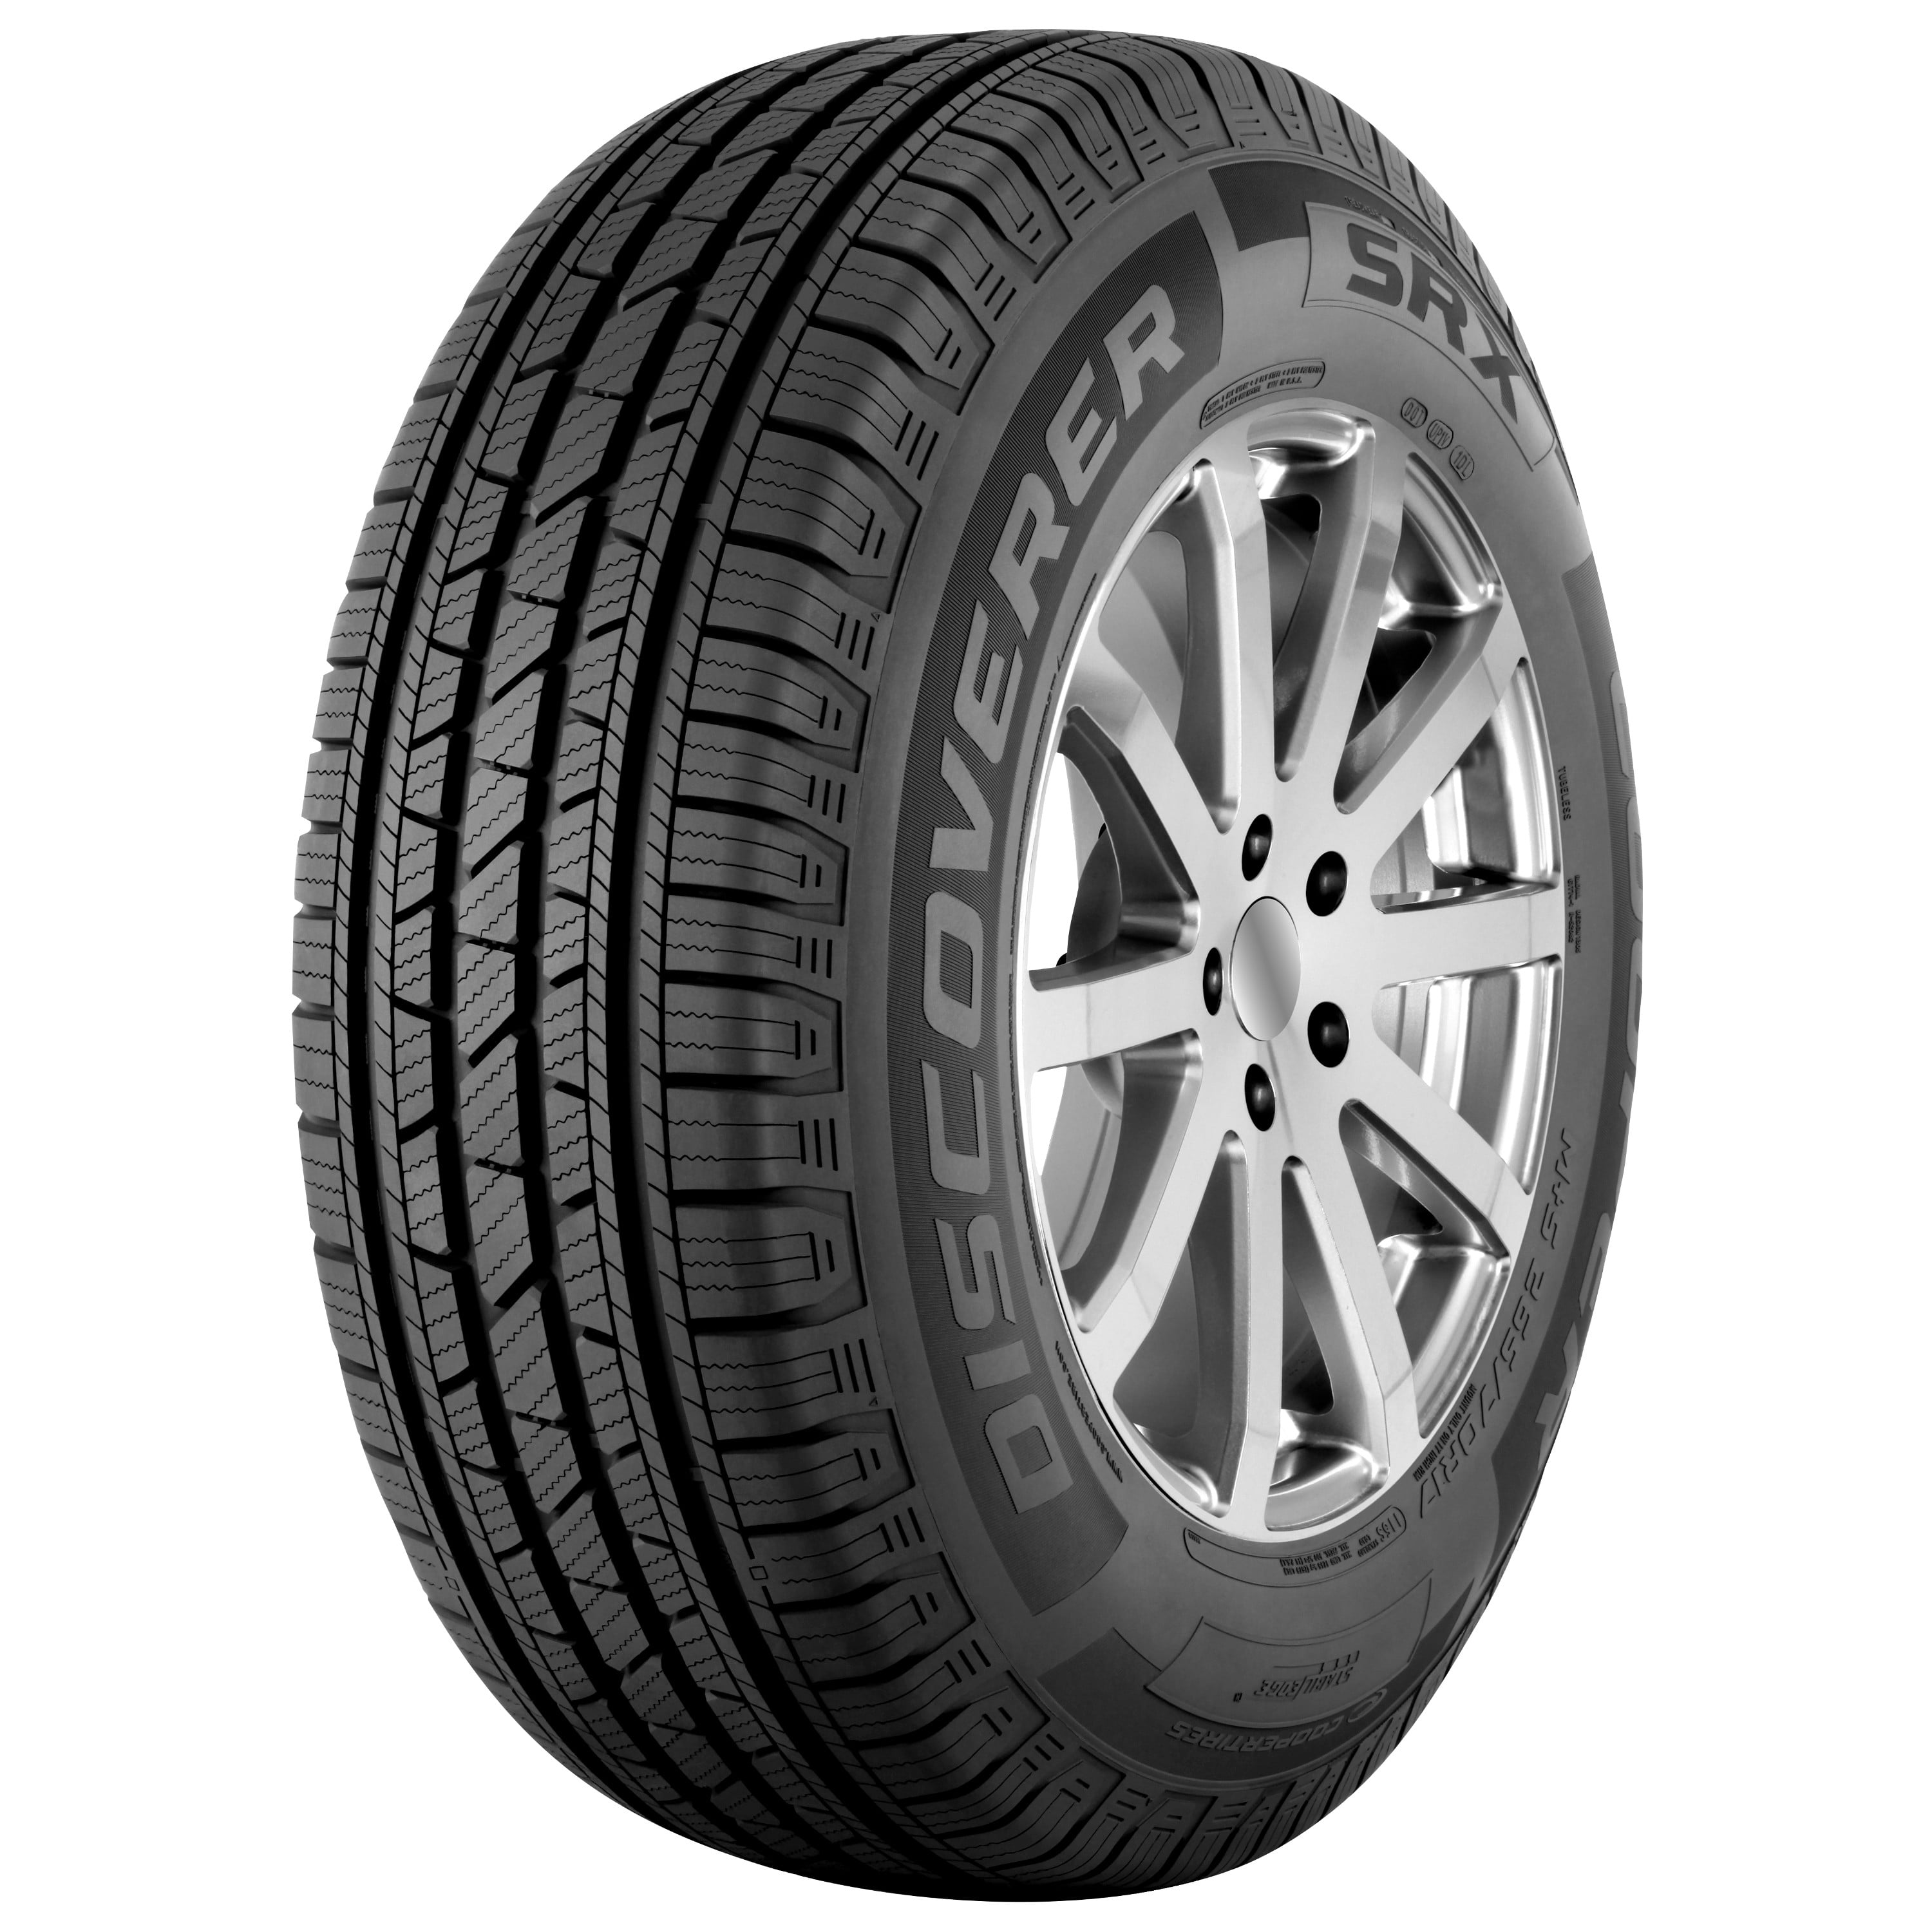 cooper-discoverer-srx-tires-truck-performance-all-season-tires